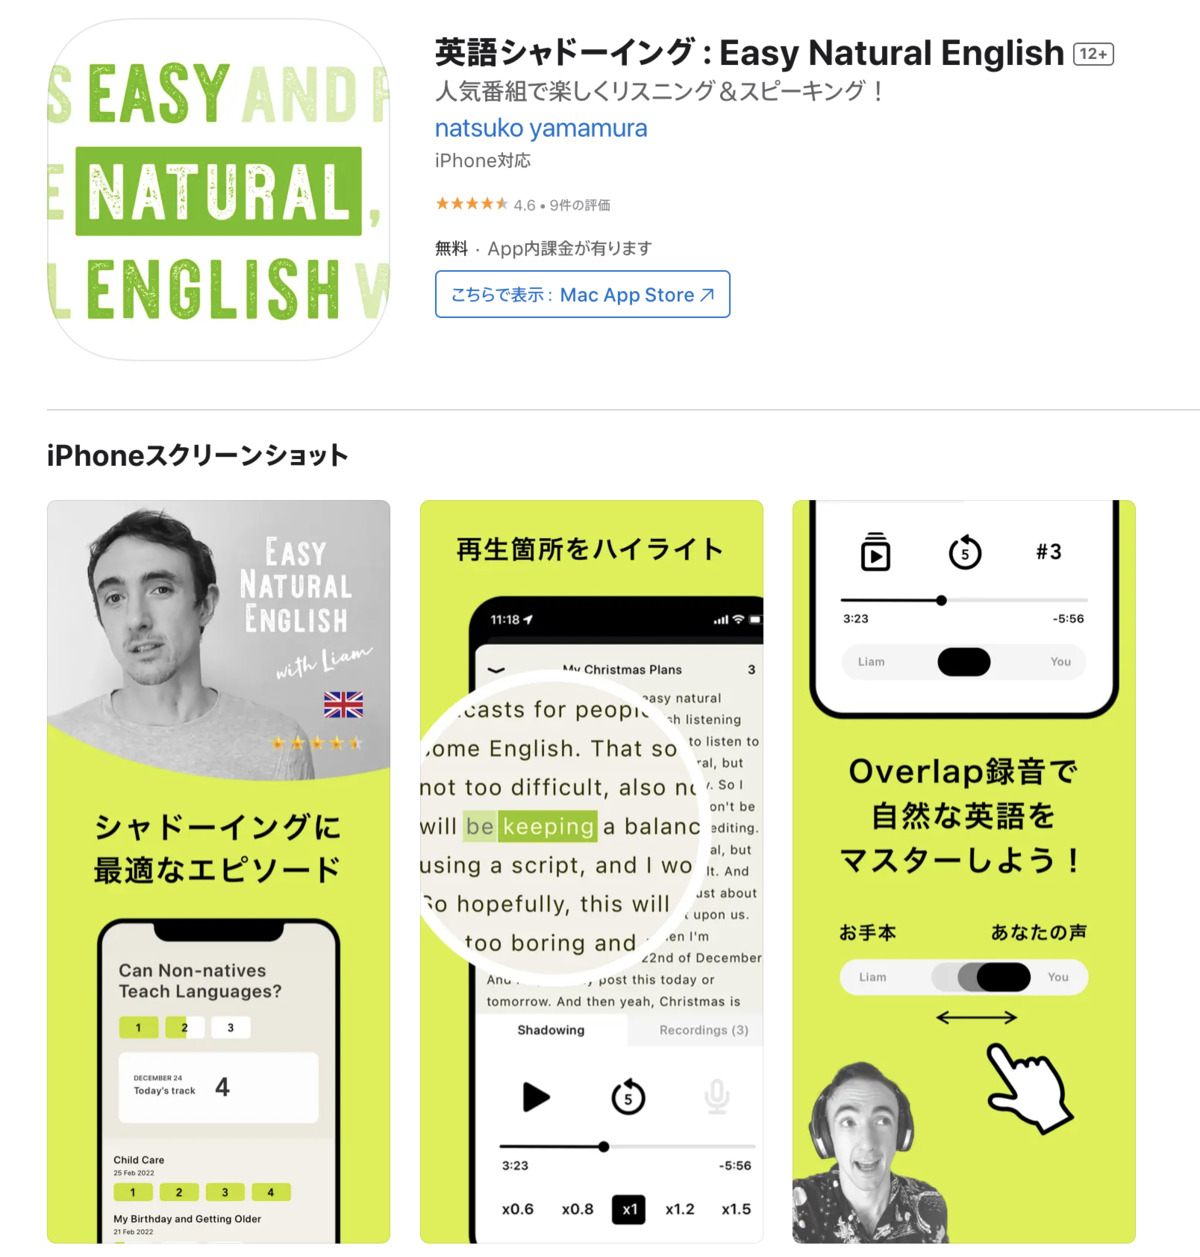 4. Easy Natural English